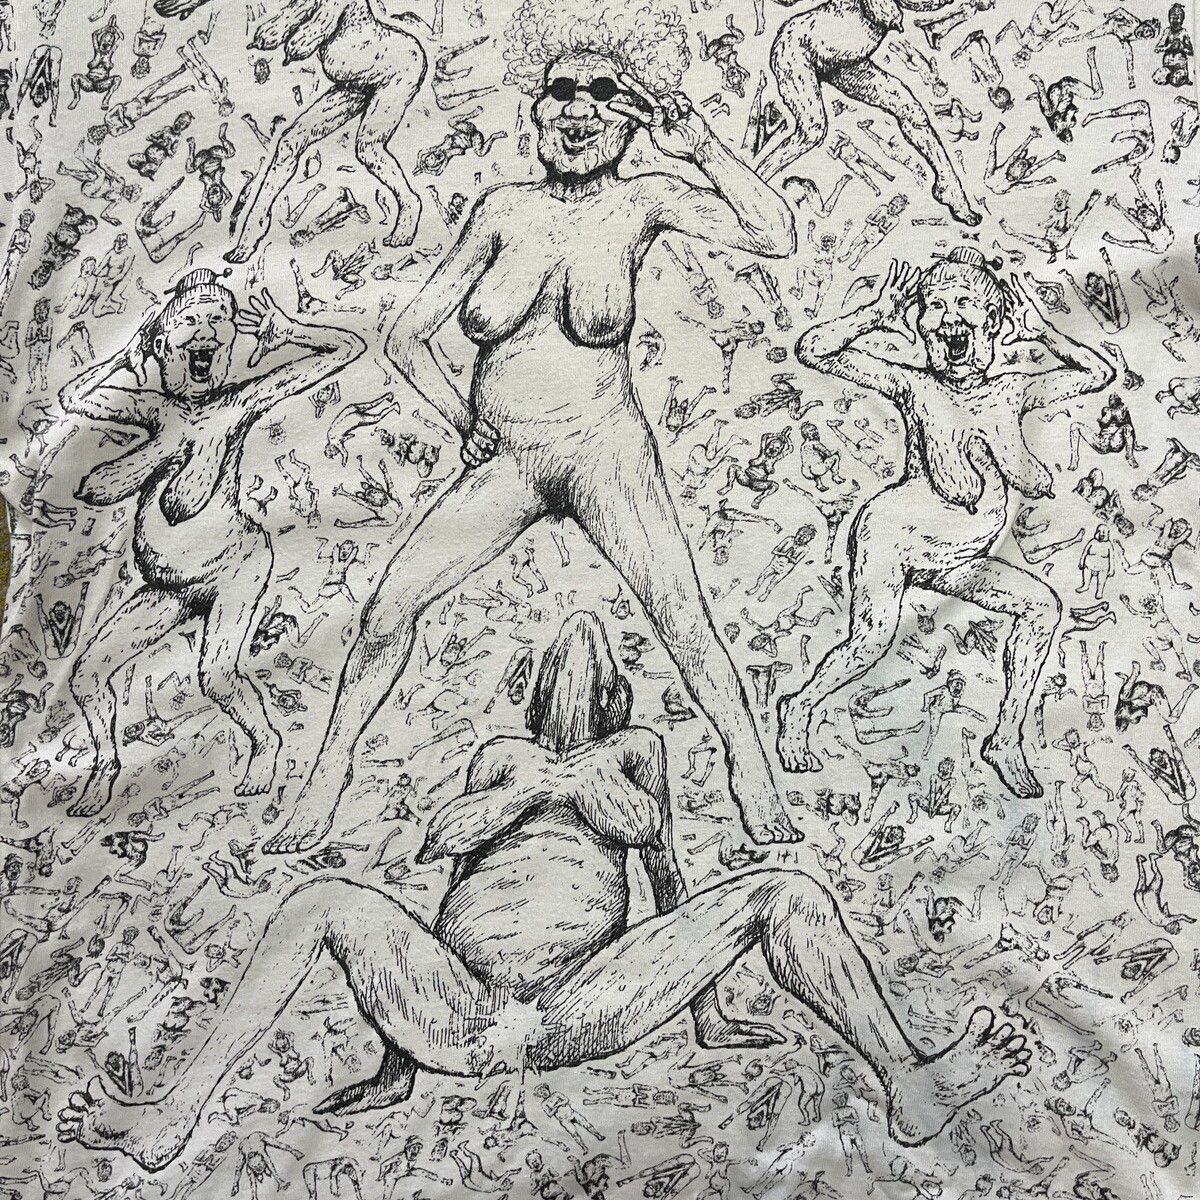 Super Rare Vintage Art Nude Granny Dance Full Printed - 16